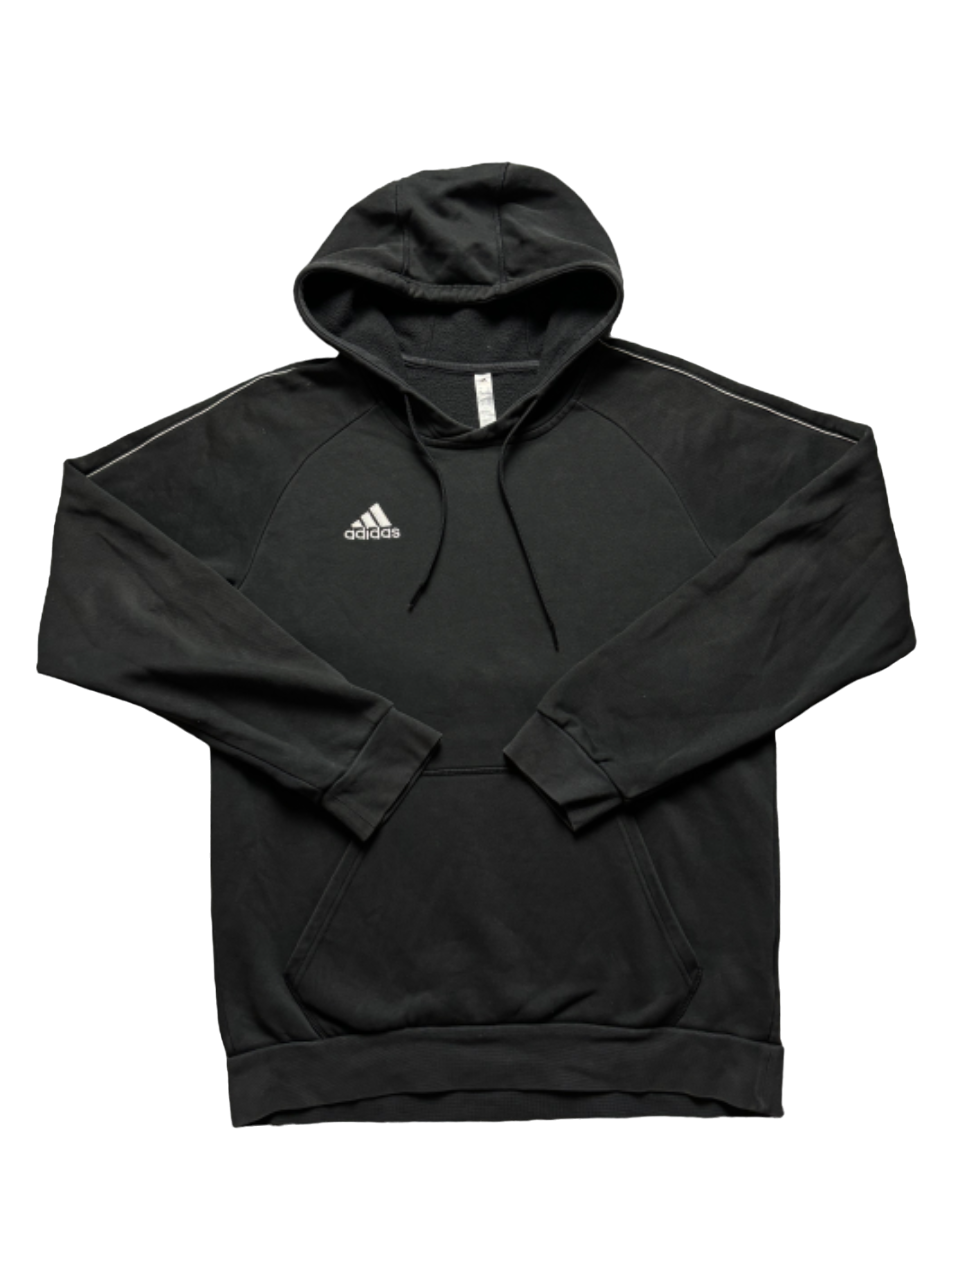 Sudadera hoodie Adidas retro 00s - Medium